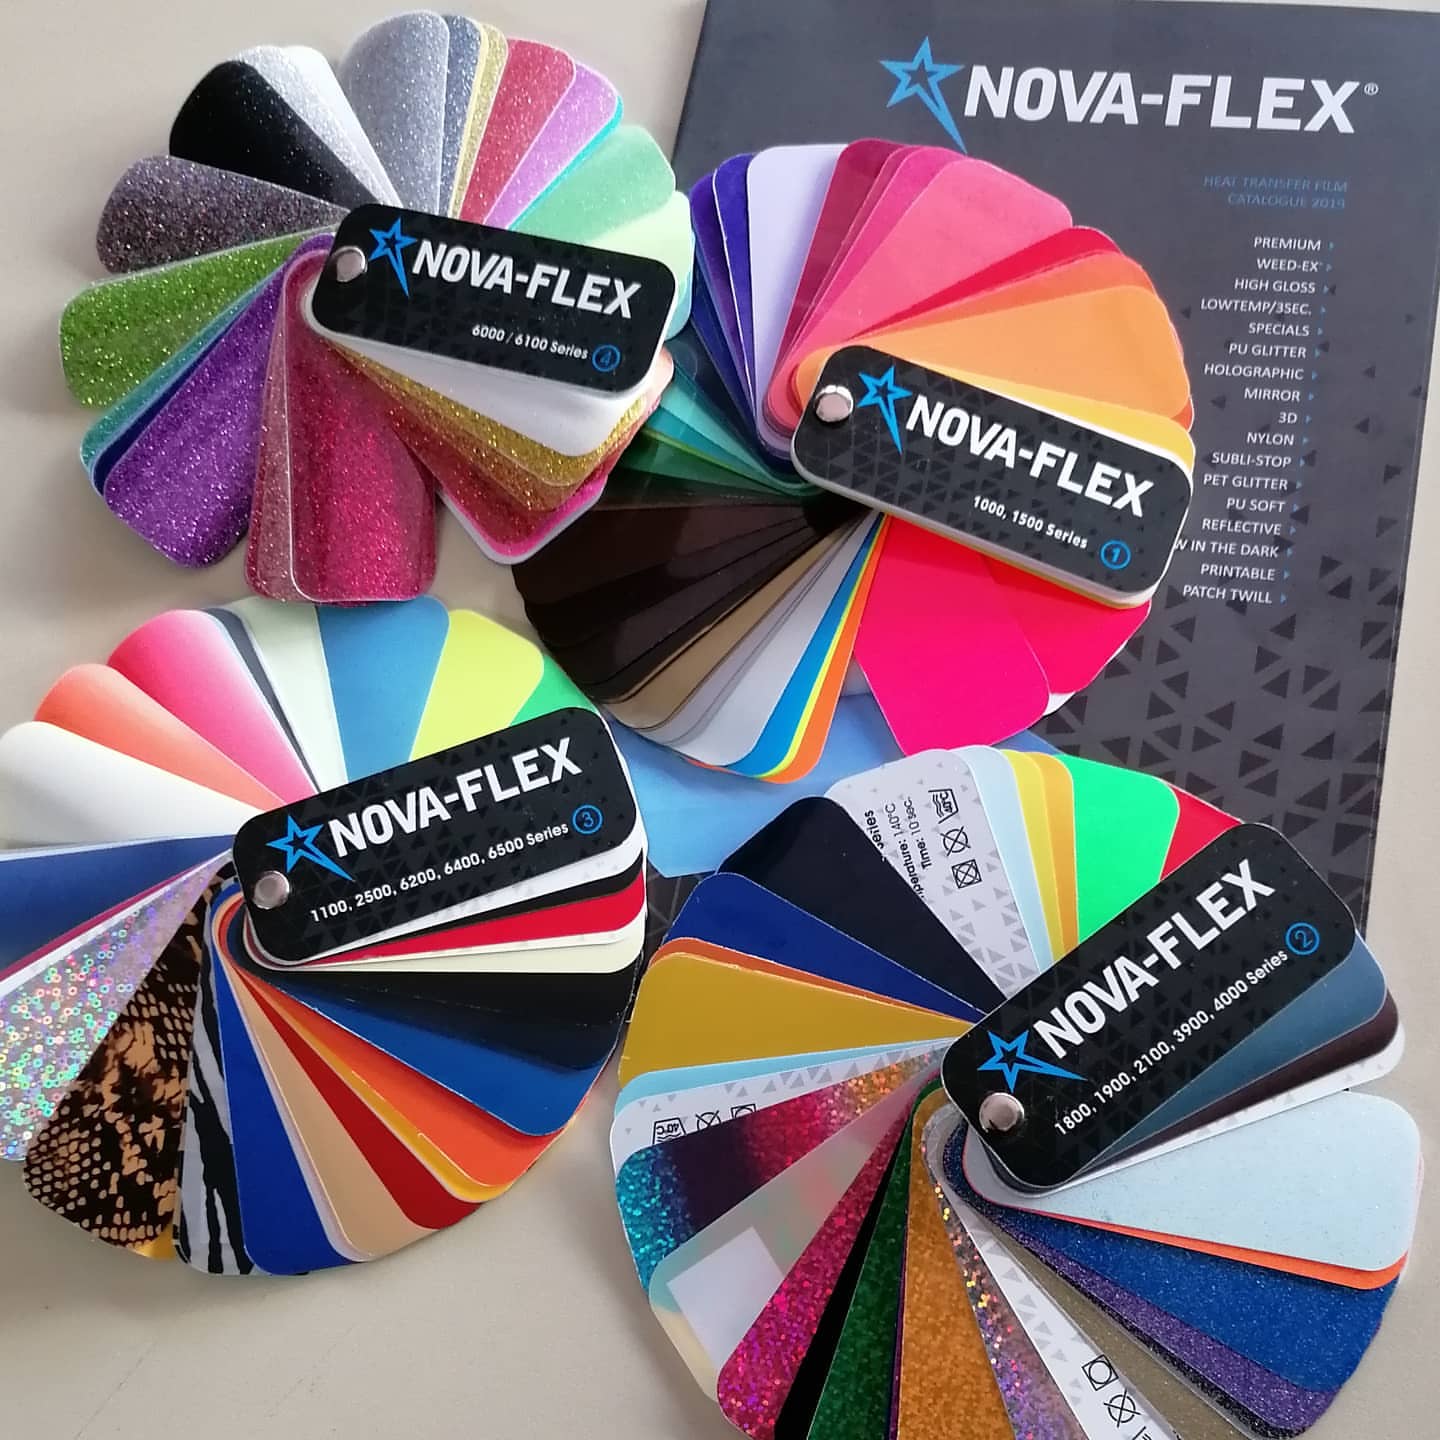 Flex флекс. Nova-Flex 1500 пленка. Термопленки Flex (Флекс) Флекс. Nova-Flex Premium. Цветовой веер.